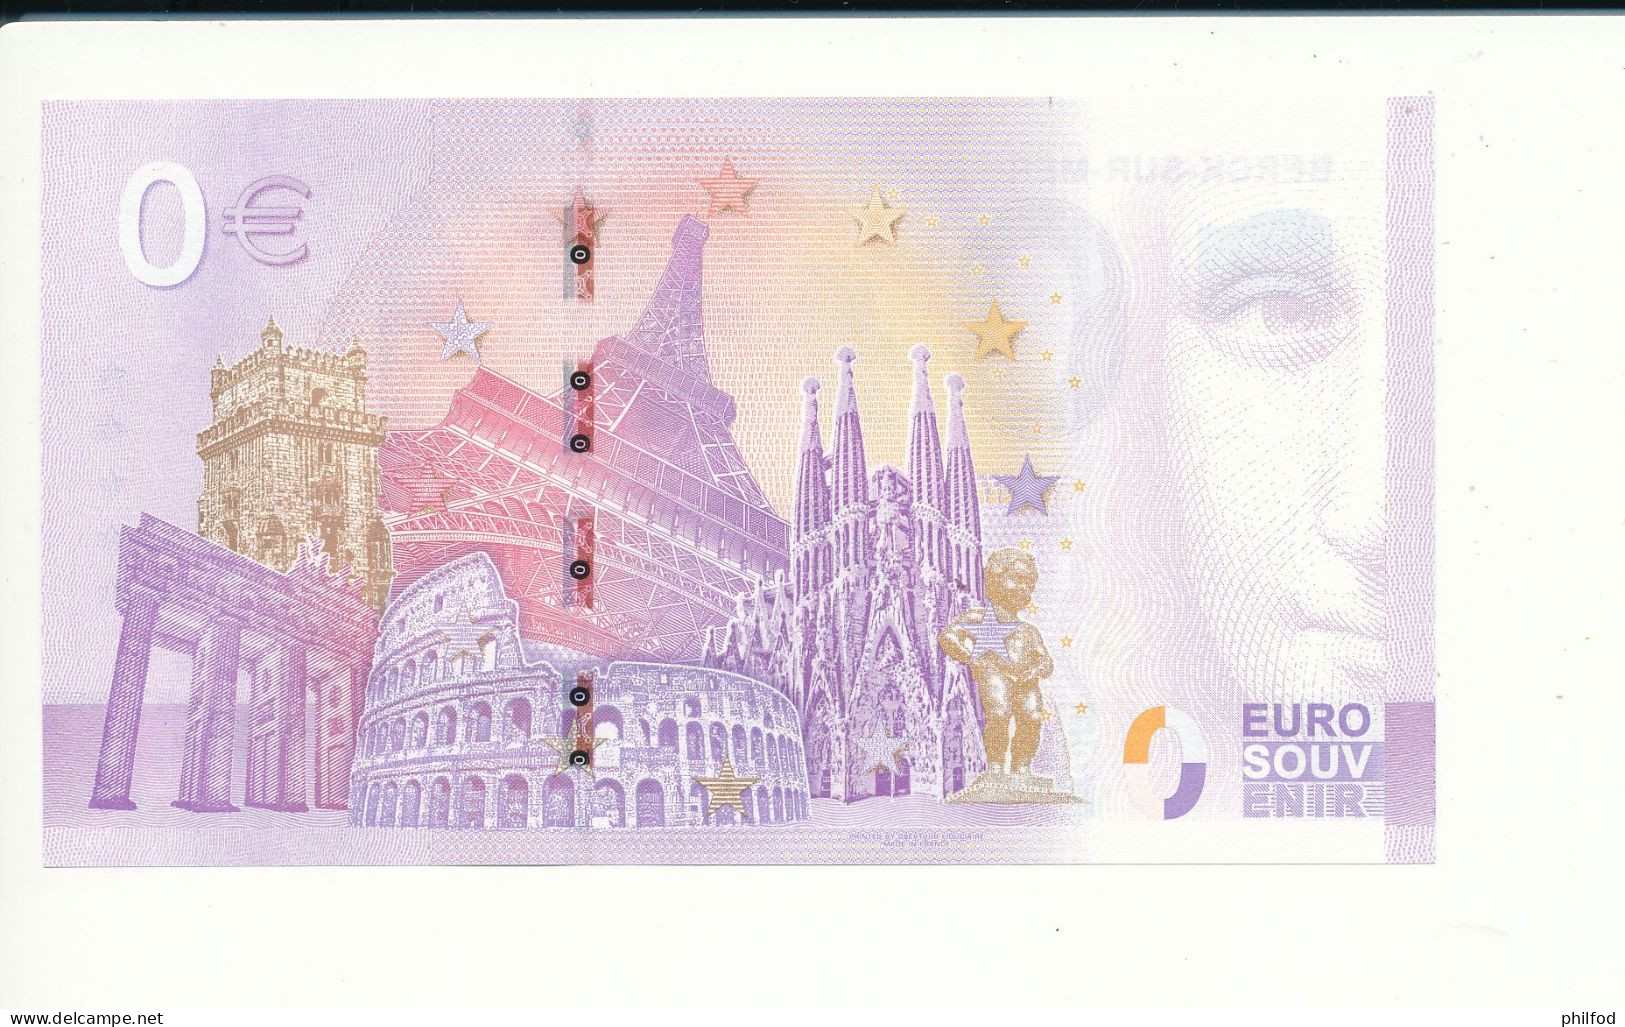 Billet Souvenir - 0 Euro - BERCK-SUR-MER - UEGZ - 2023-4 - N° 568 - Kiloware - Banknoten